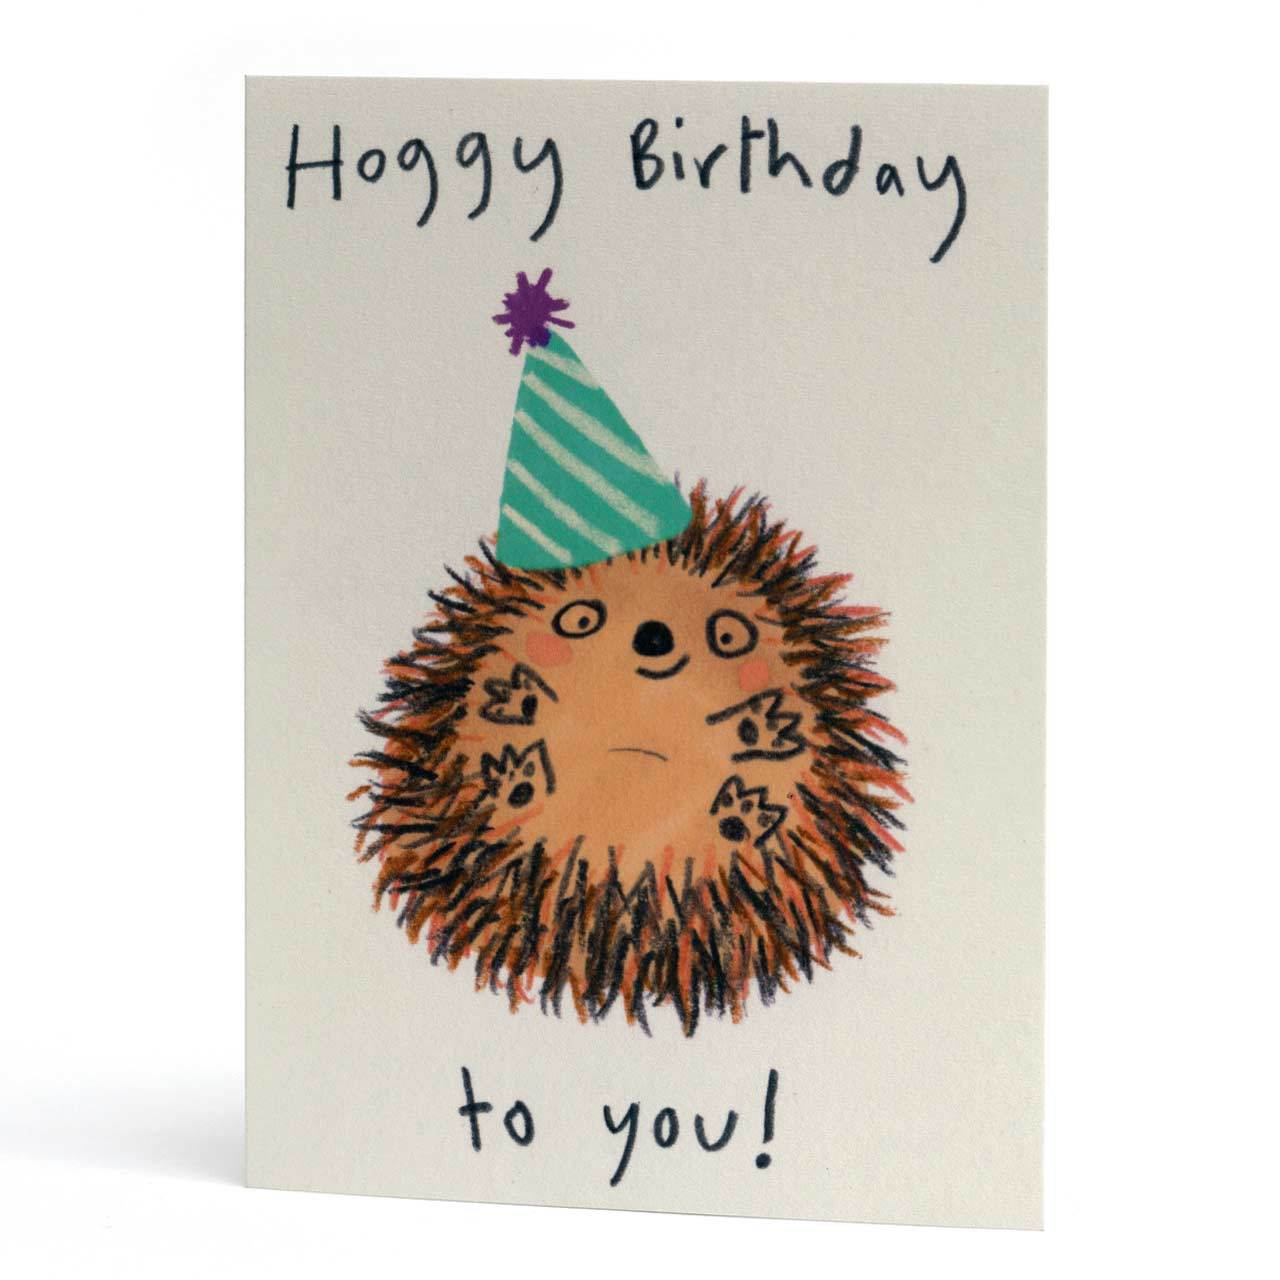 Hoggy Birthday to You Card